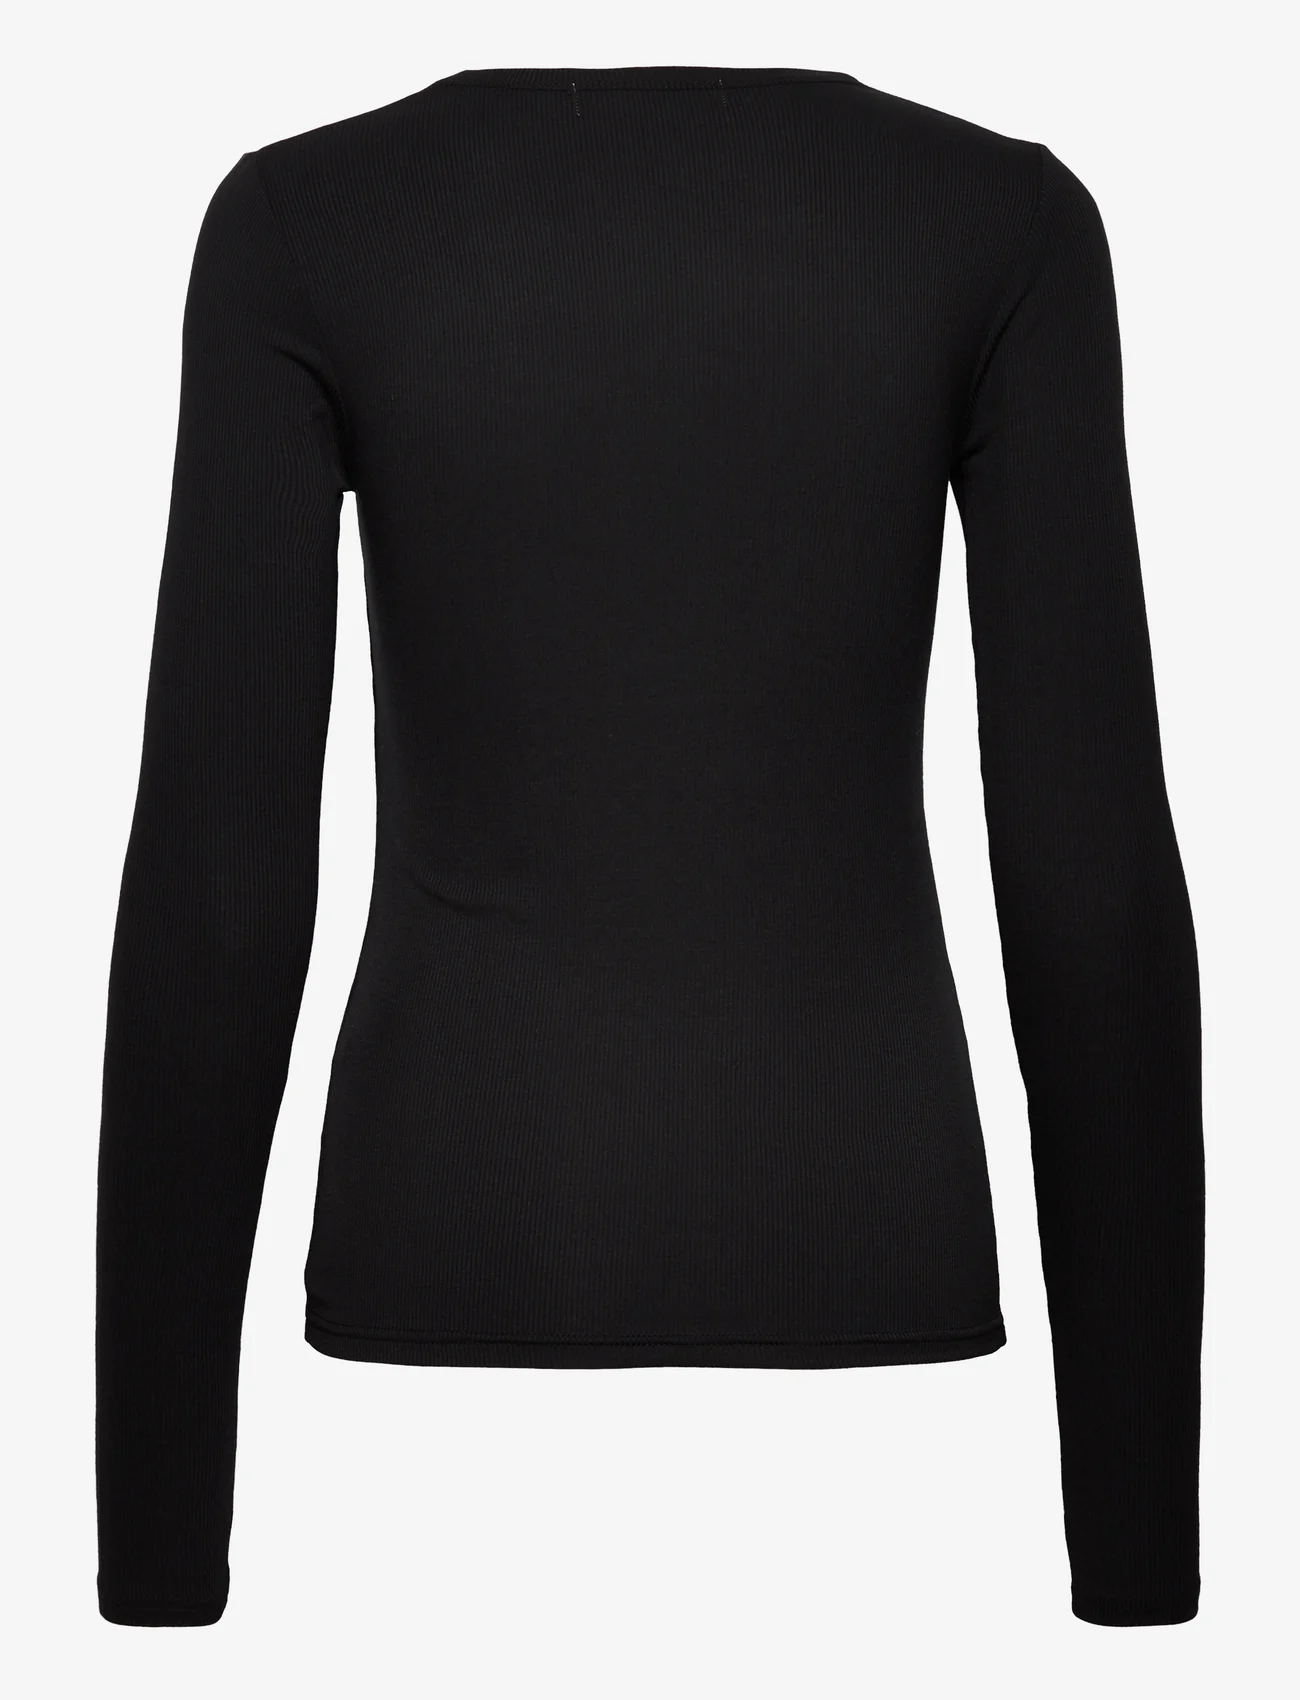 Sofie Schnoor - T-shirt long sleeve - topy z długimi rękawami - black - 1